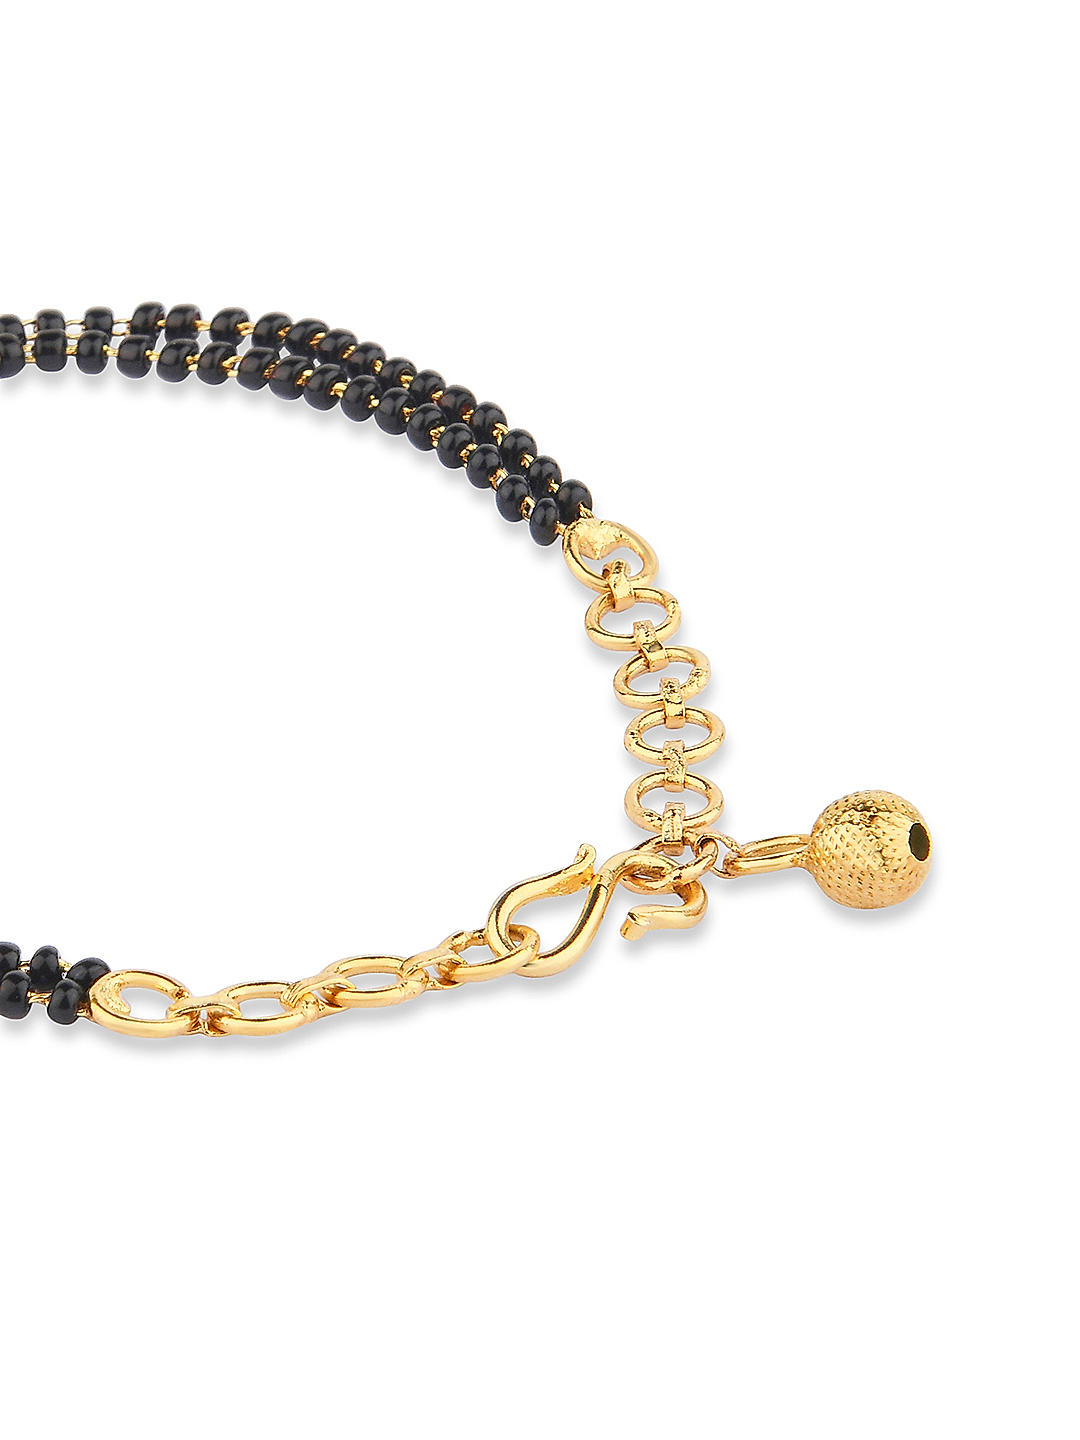 Black Gold Bracelet - Buy Black Gold Bracelet online in India